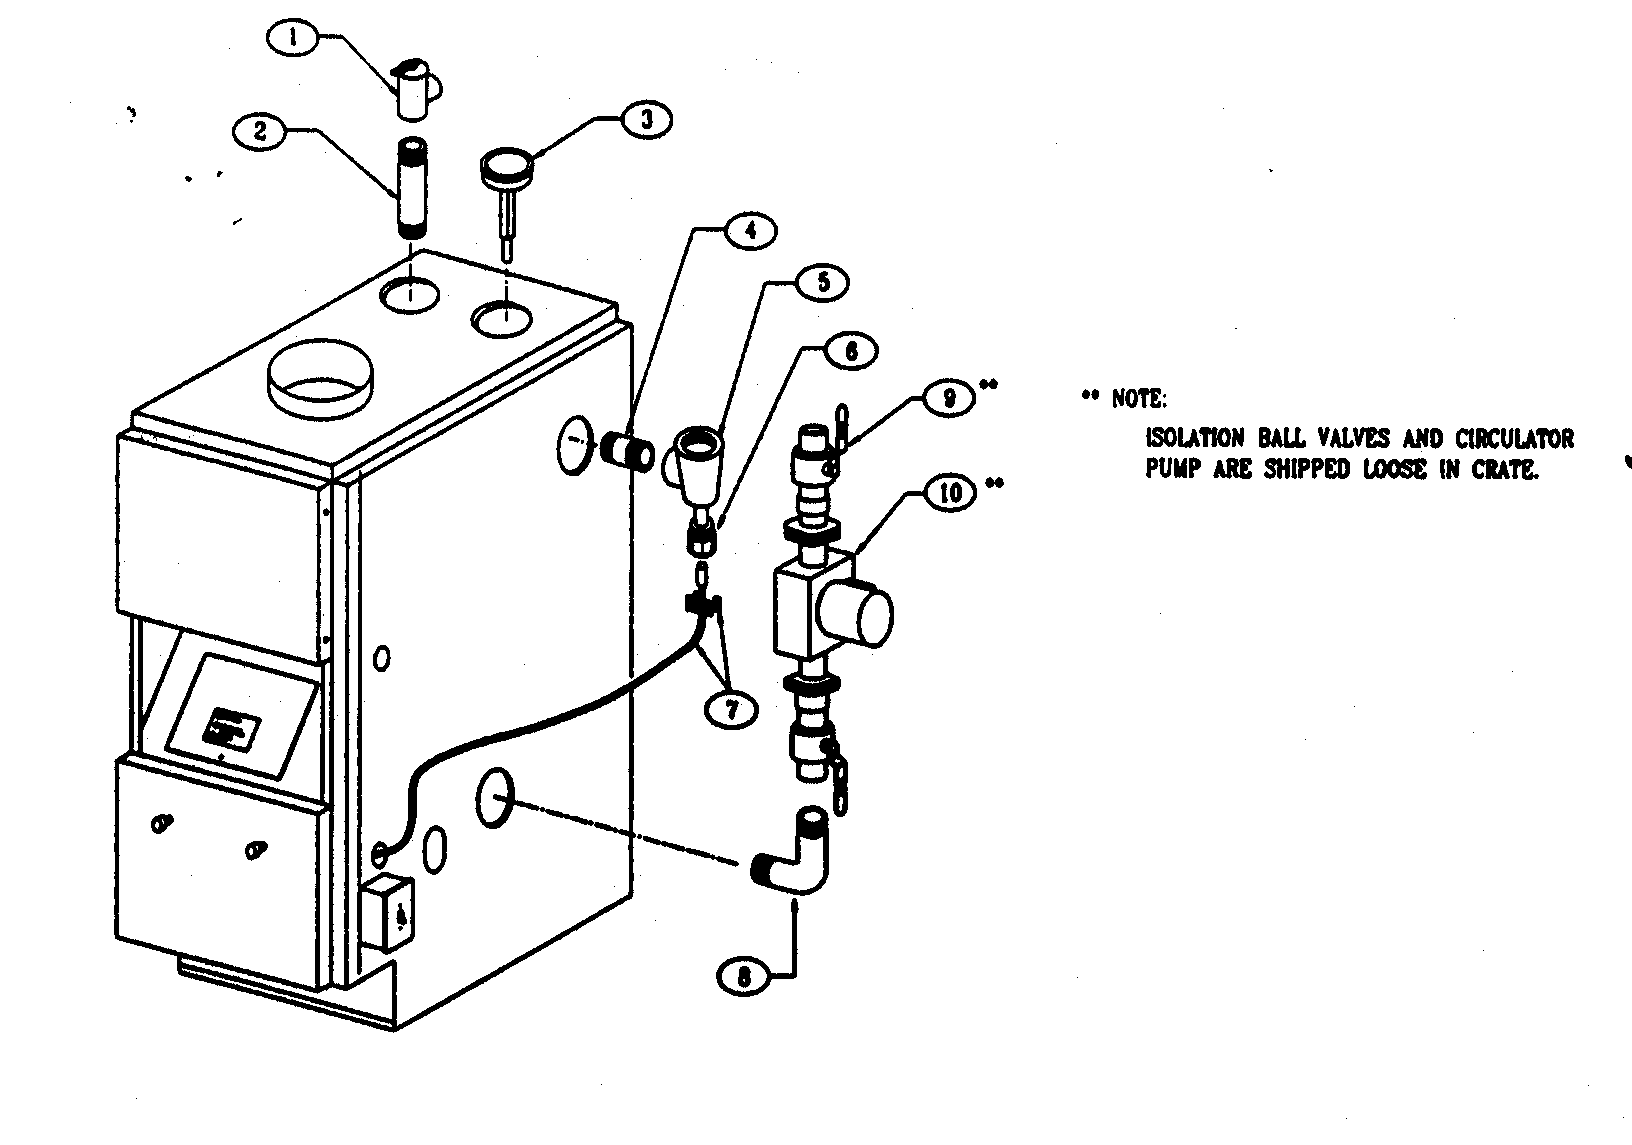 [DIAGRAM] Central Boiler Part Diagram - MYDIAGRAM.ONLINE